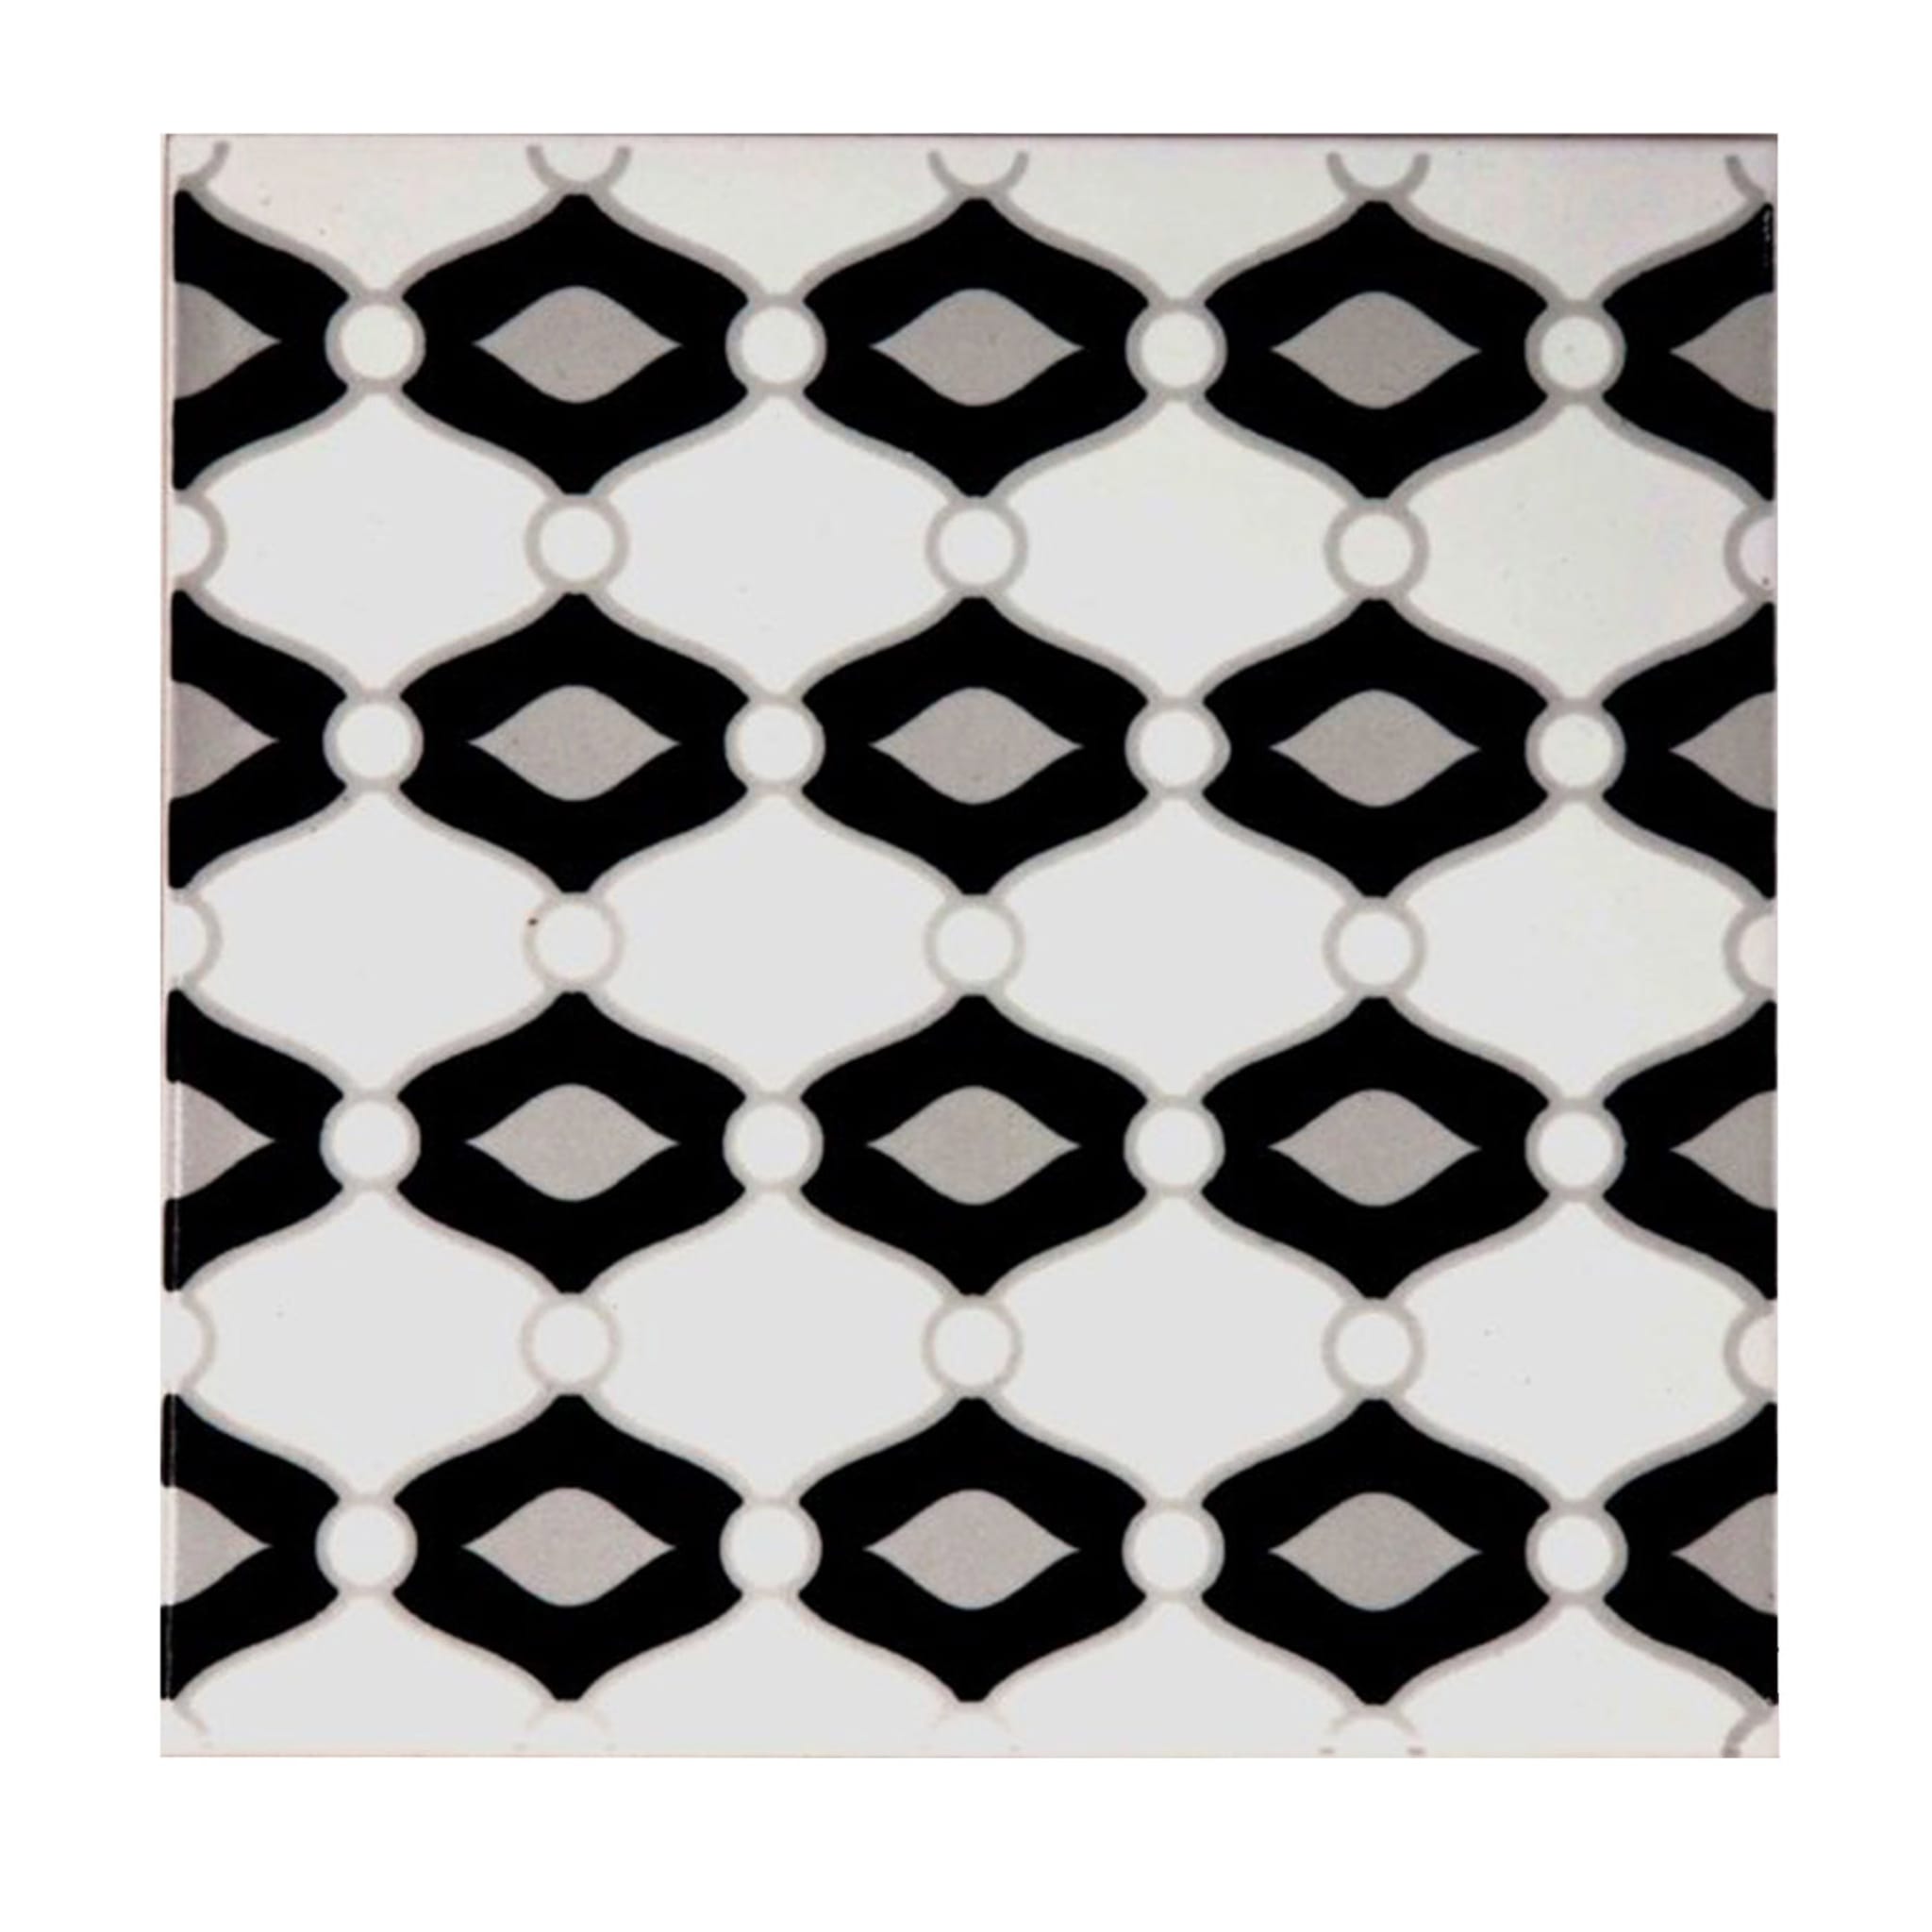 Set of 25 Geometric Trend C44 T5 Tiles - Main view